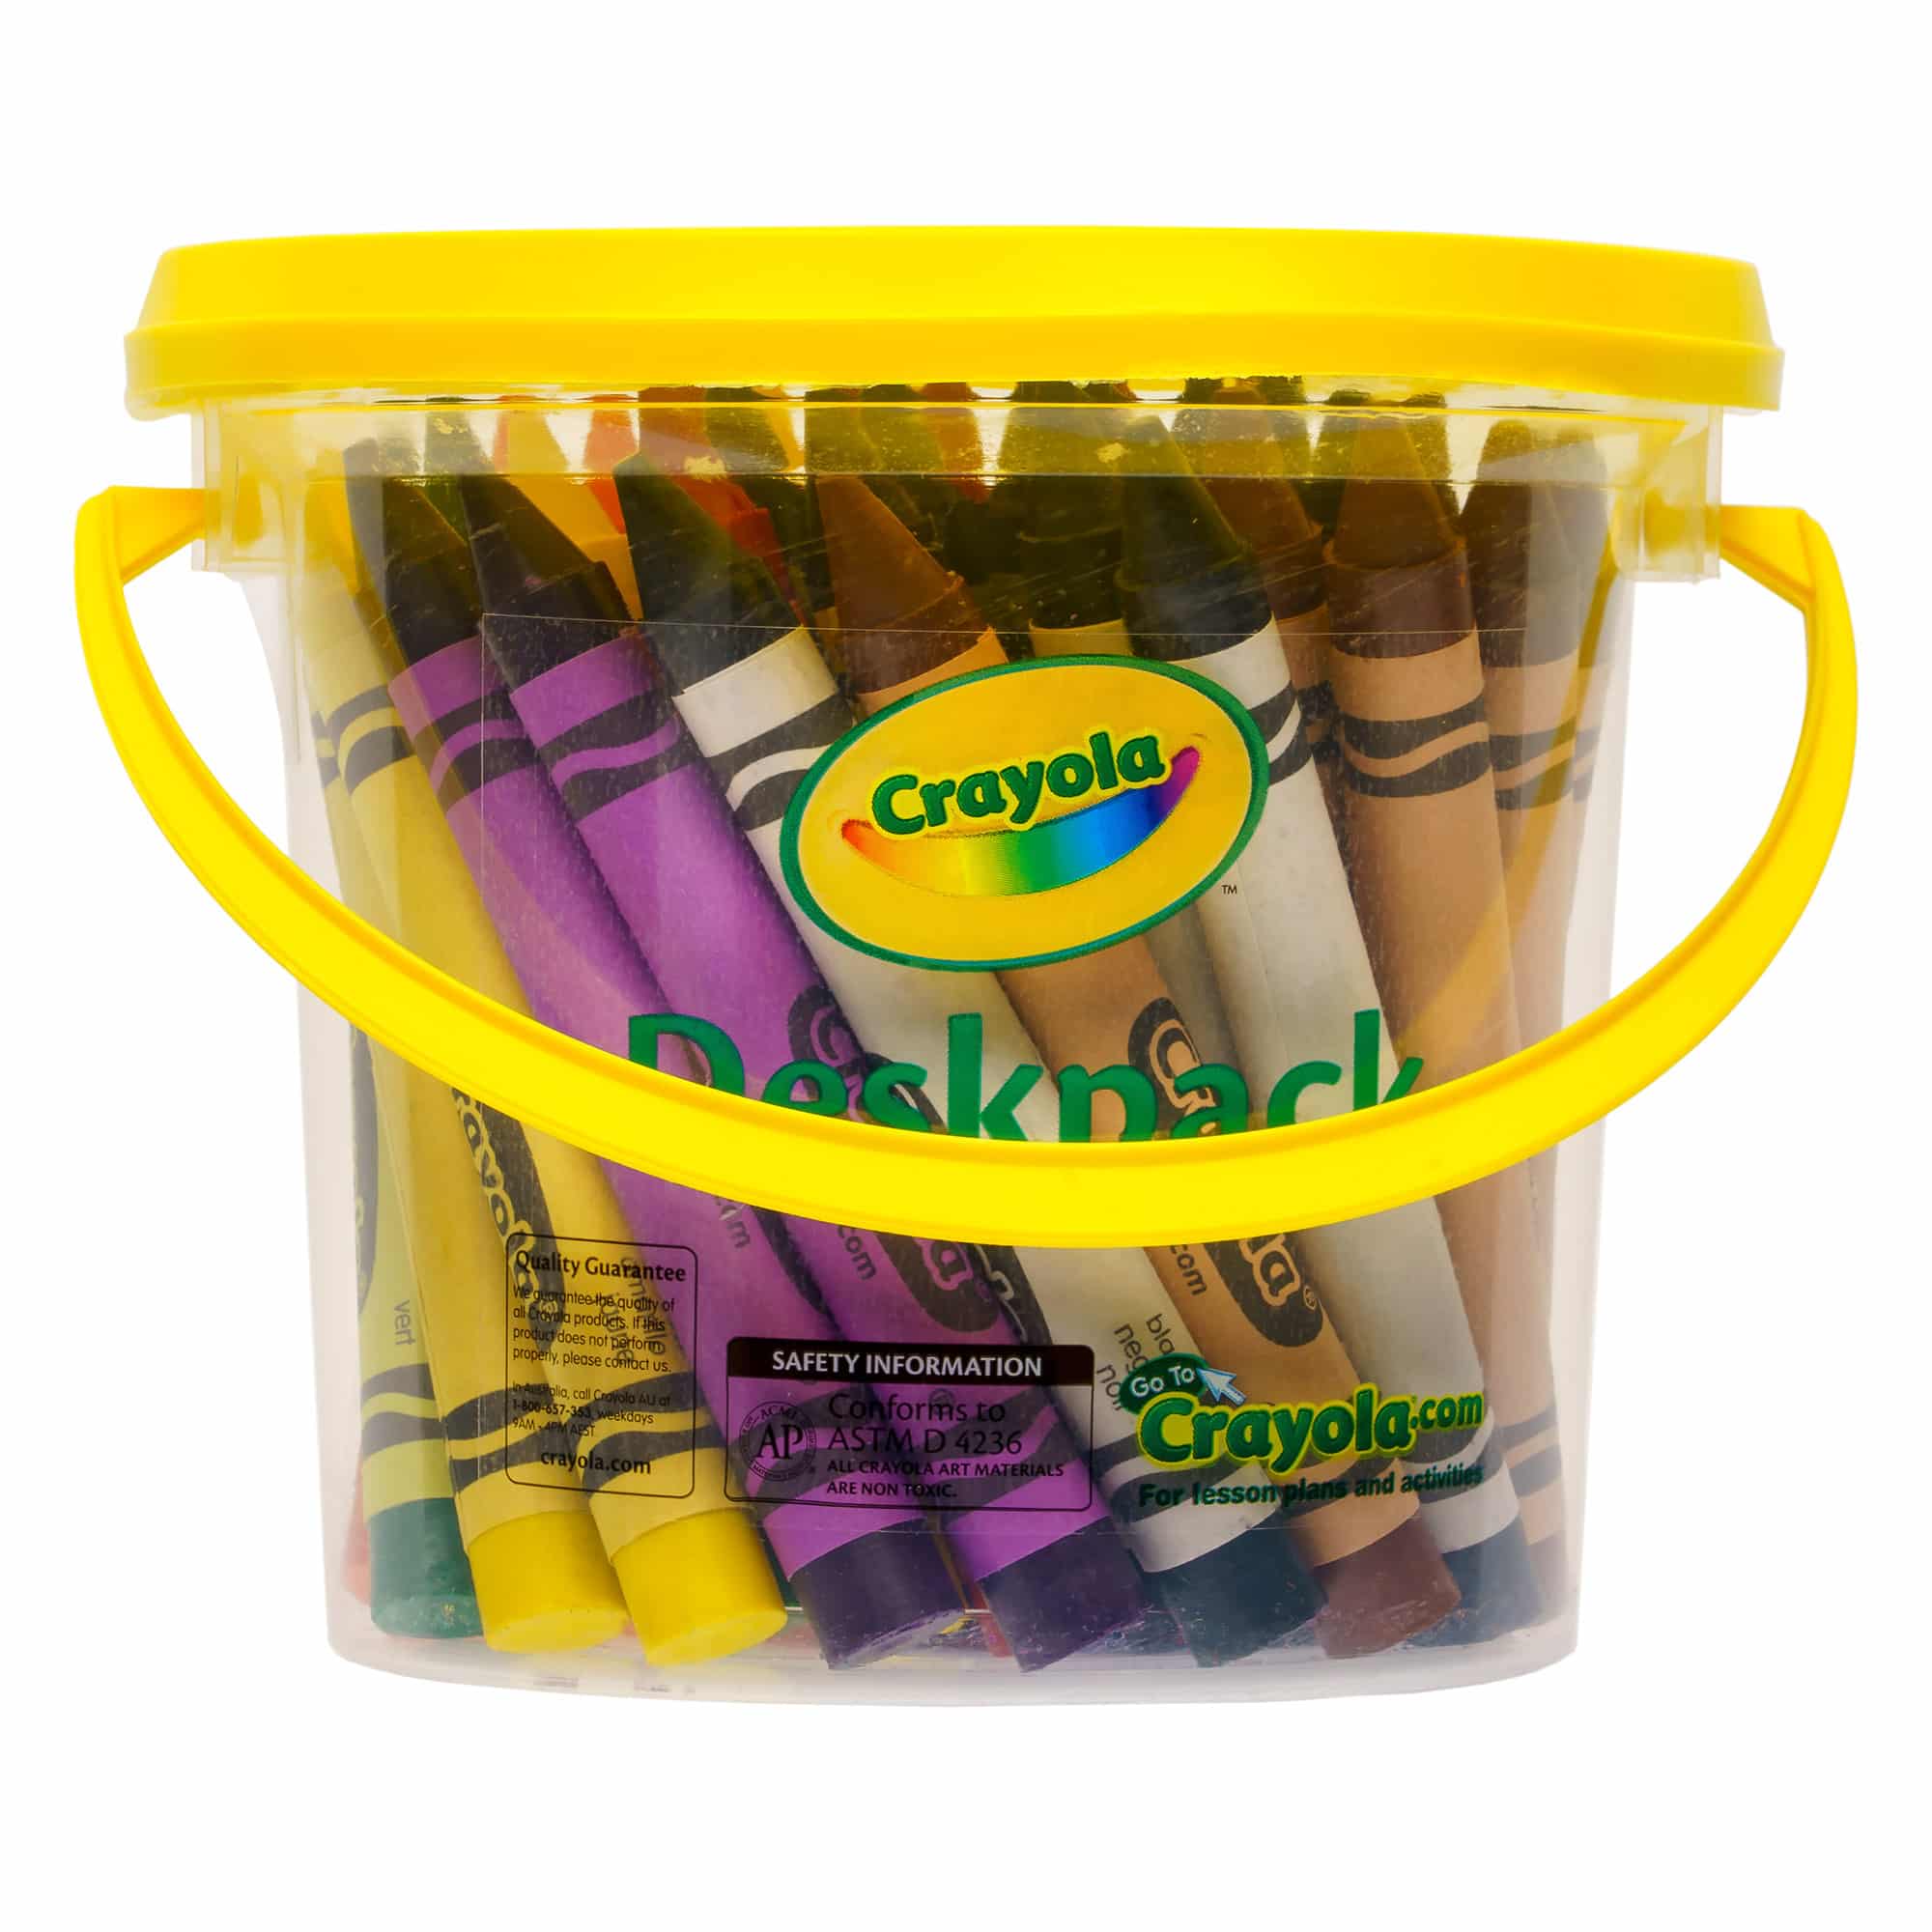 Crayola - Large Crayon Deskpack - 48 Pack